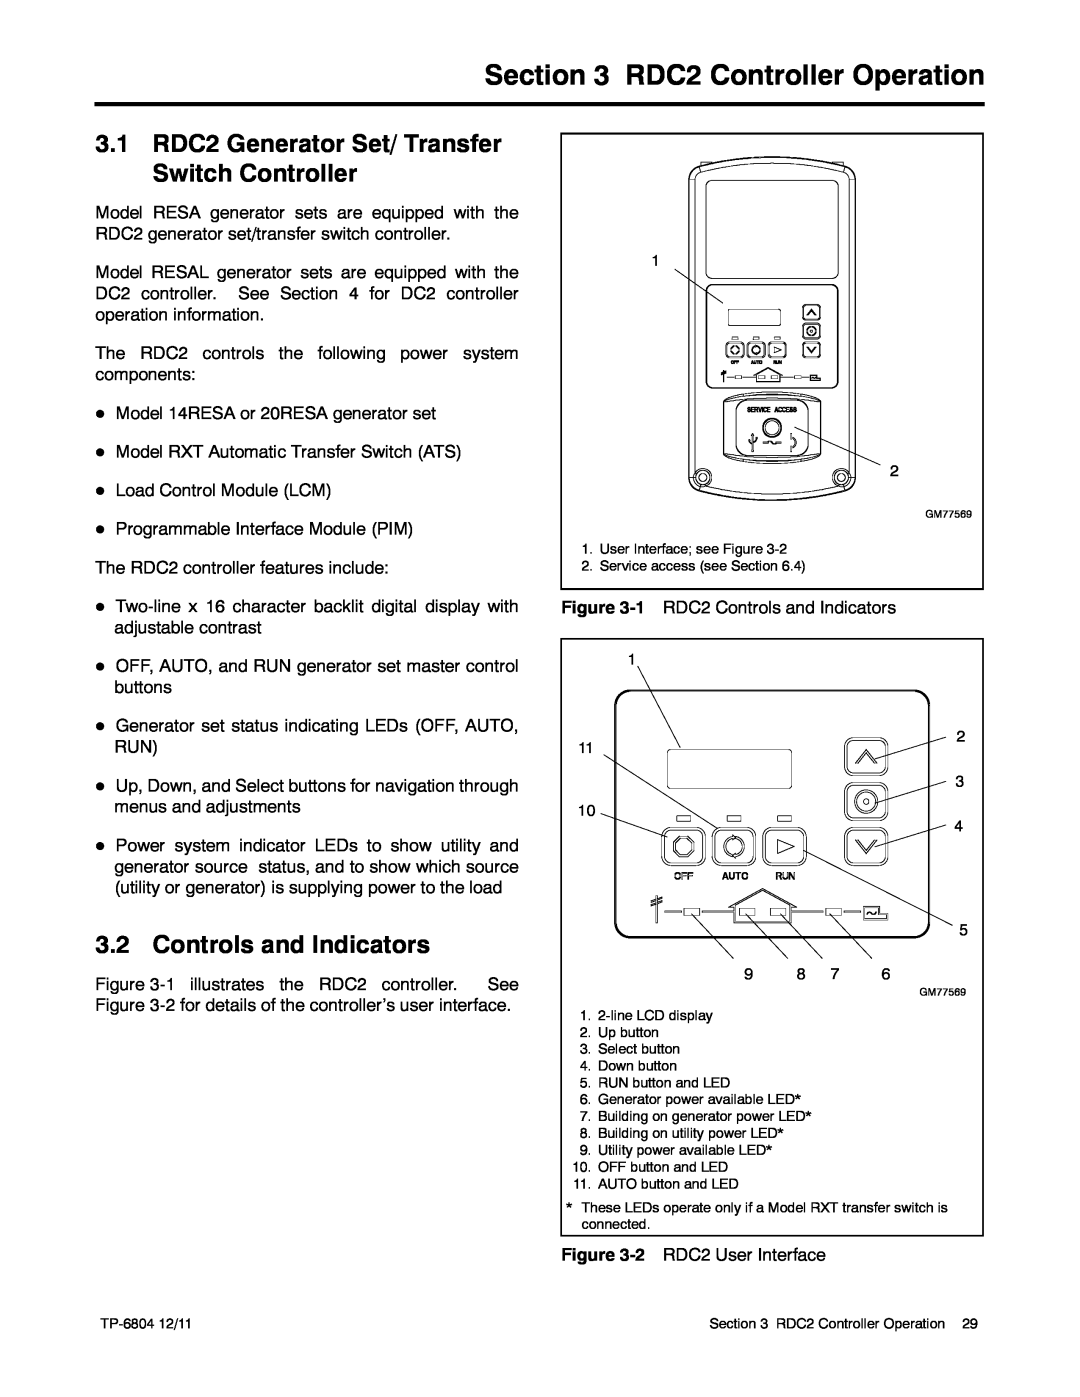 Kohler 14/20RESAL RDC2 Controller Operation, 3.1 RDC2 Generator Set/ Transfer Switch Controller, Controls and Indicators 